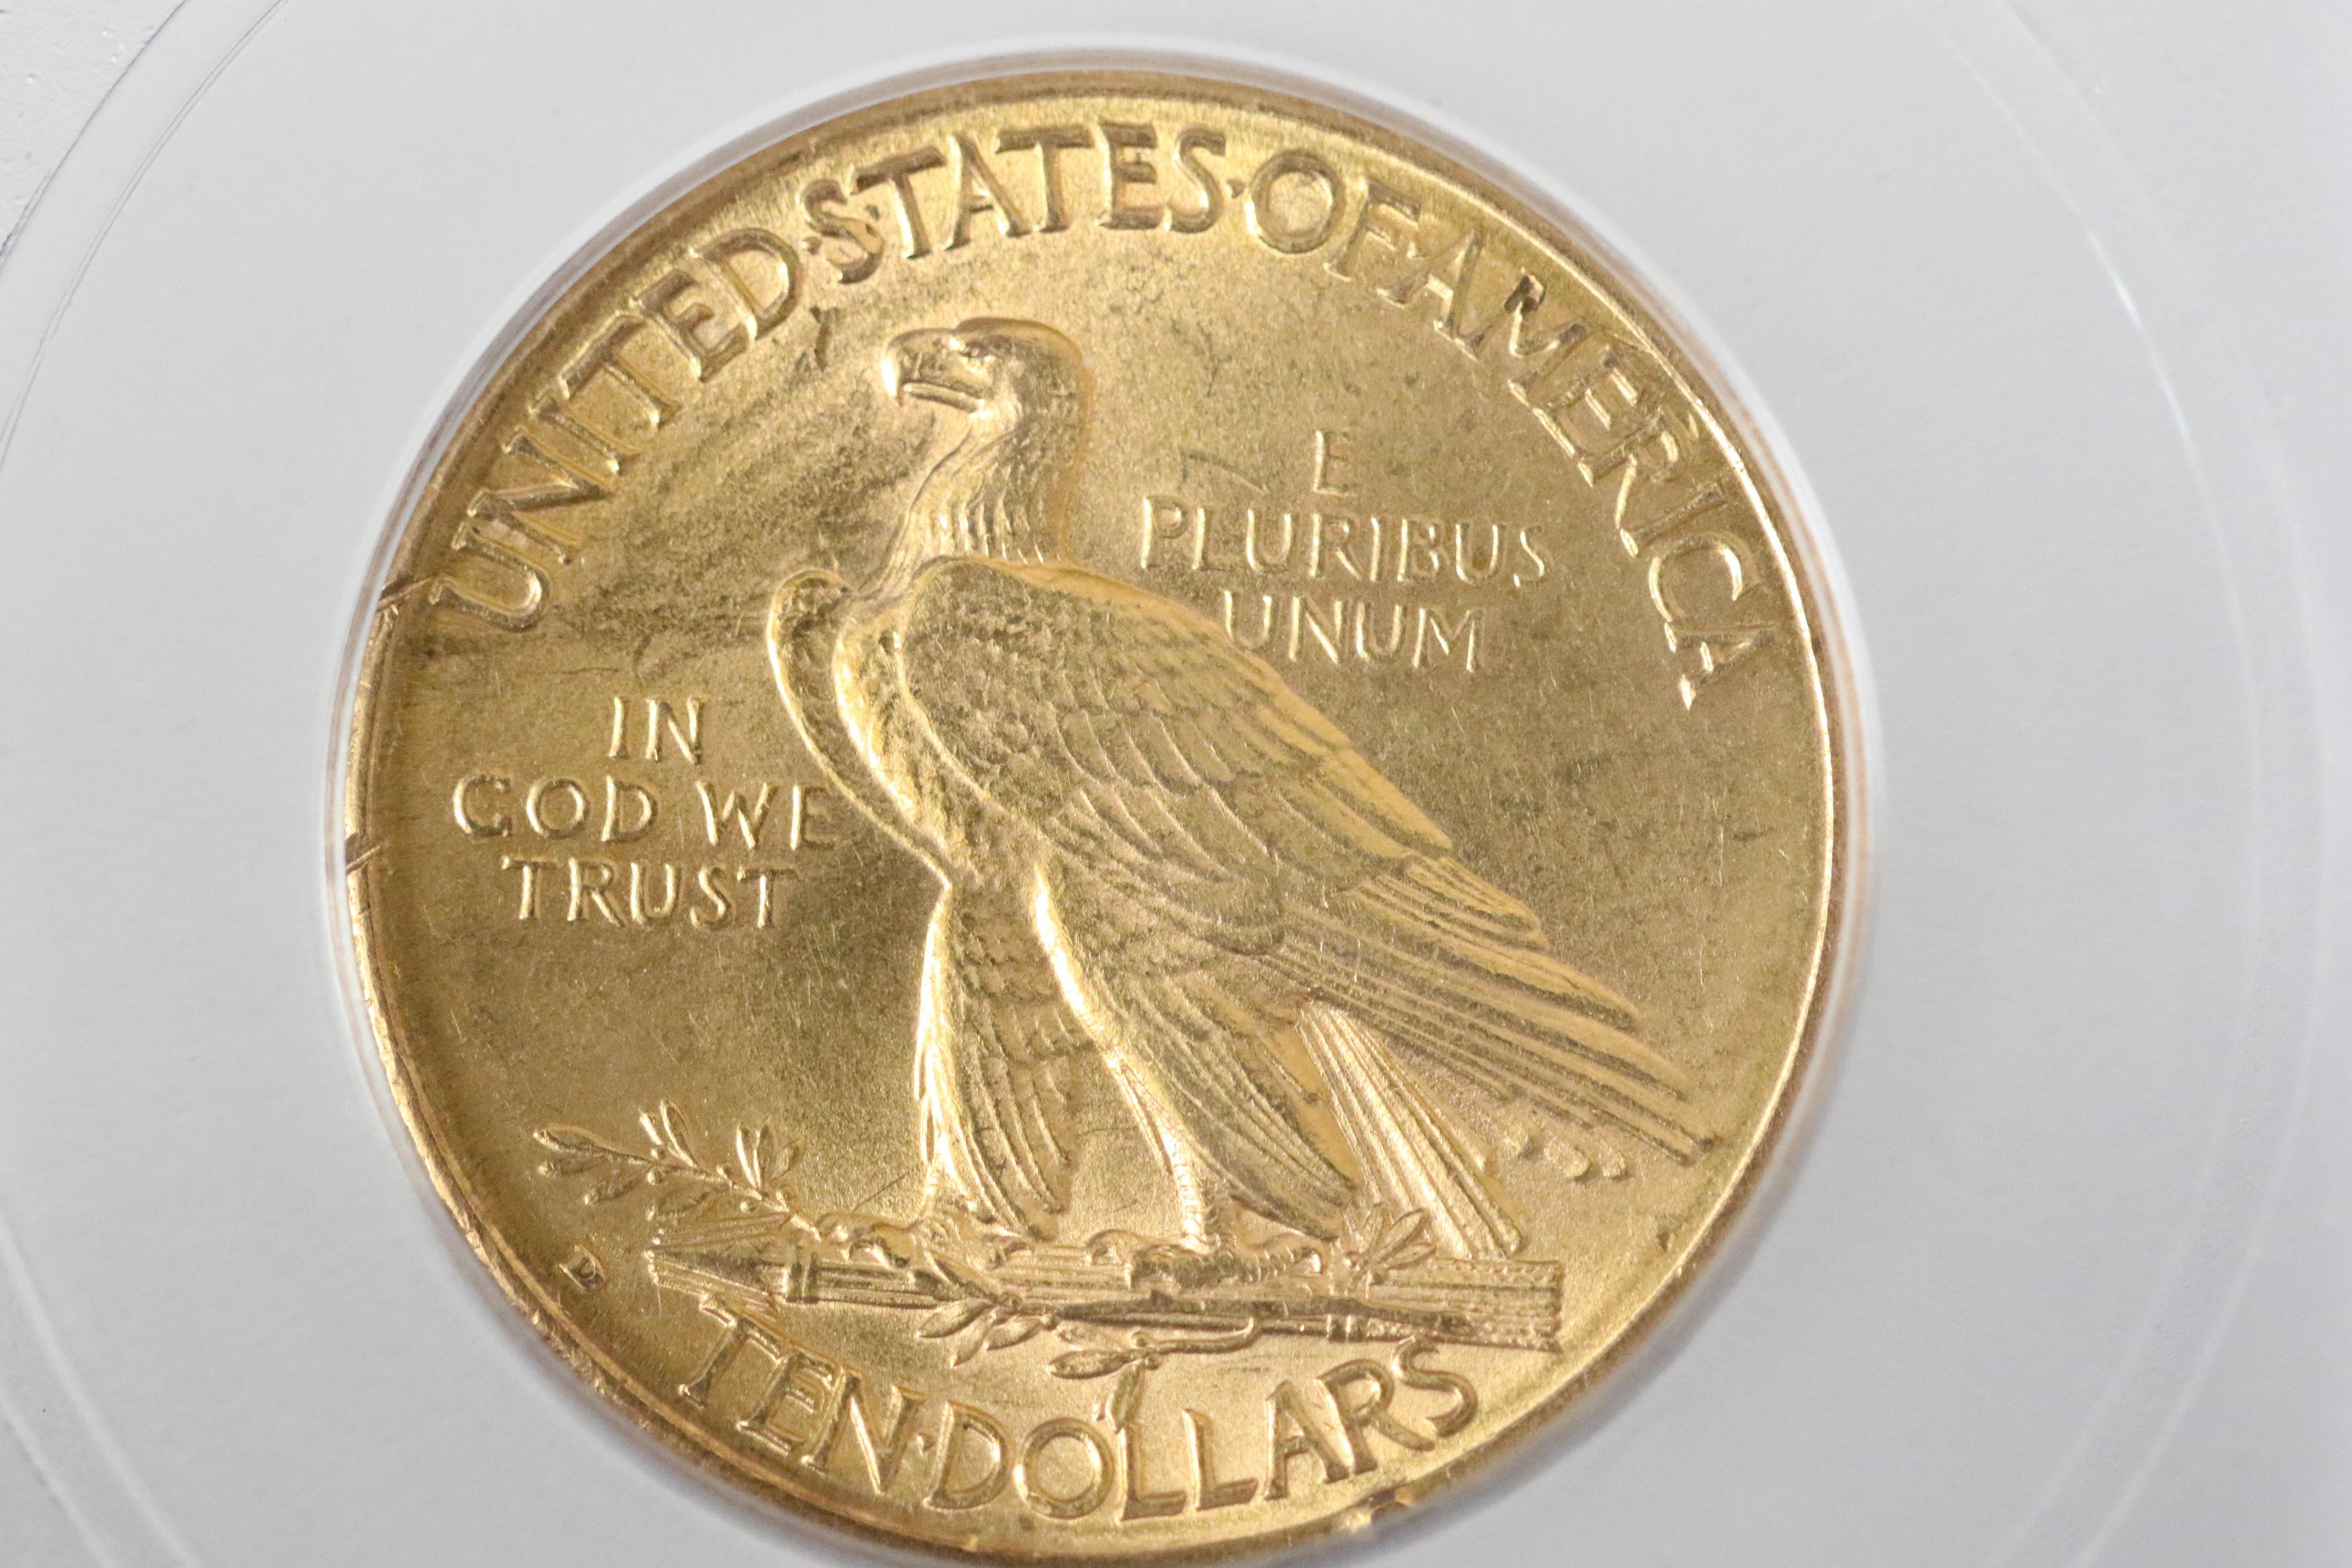 1910 D $10 Gold Coin, Indian Head Eagle